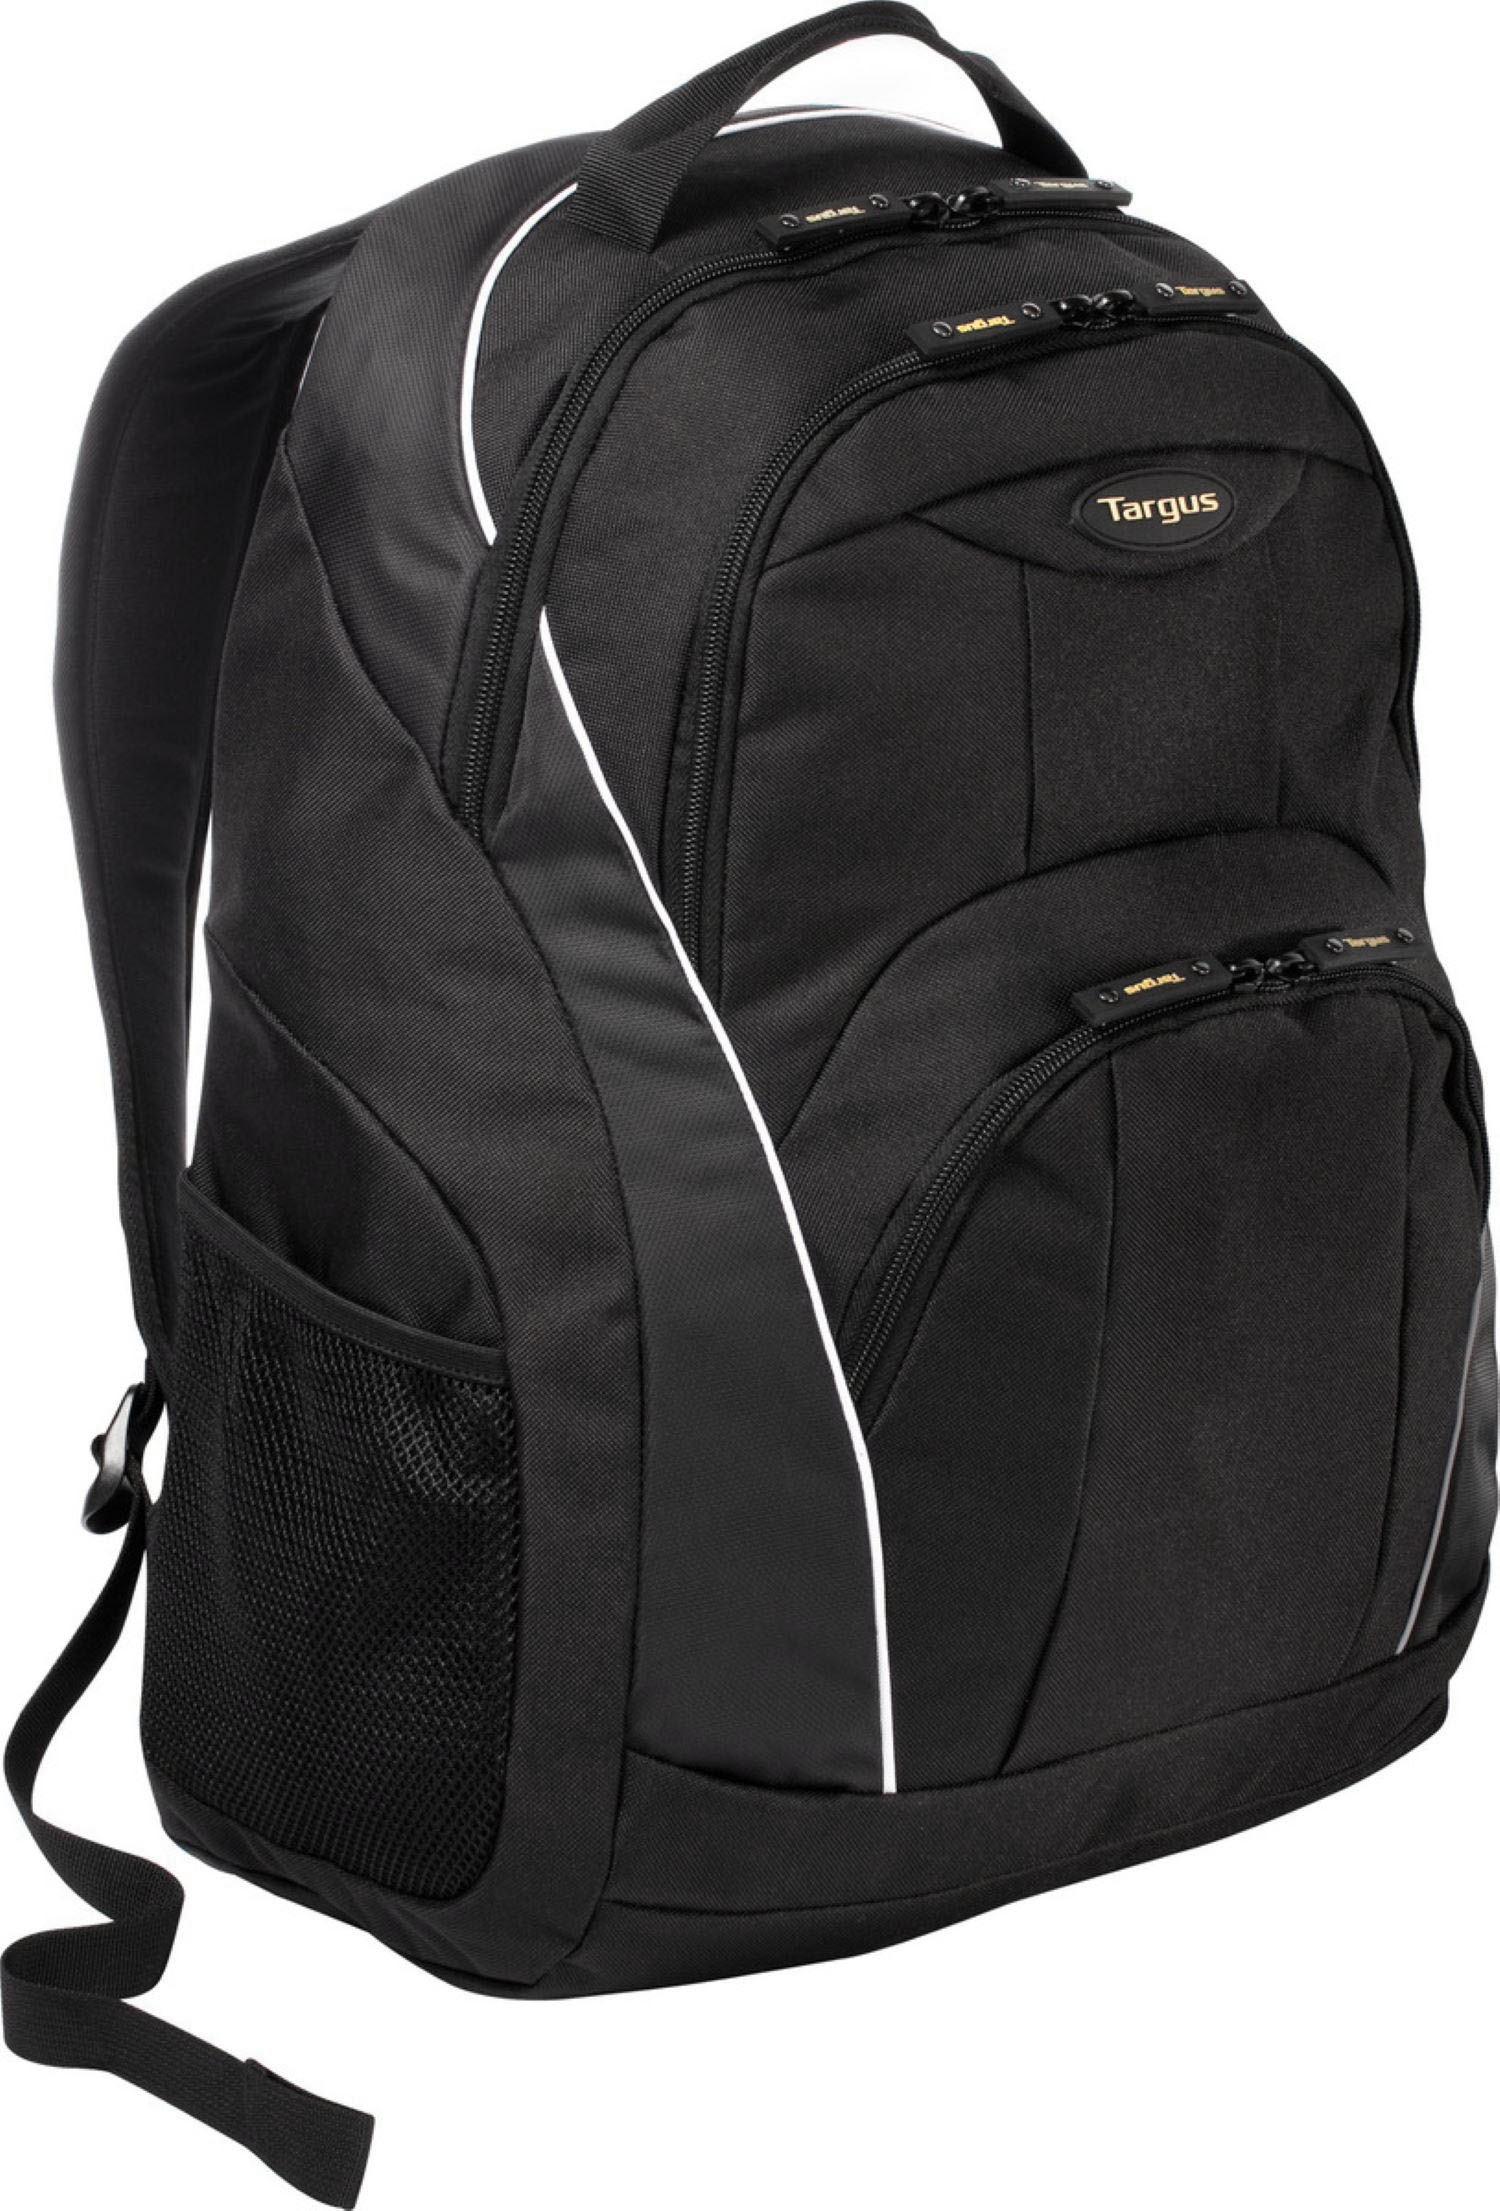 Homewifi Greys Anatomy 17 Inch Backpack Laptop Adjustable Shoulder Business Travel School